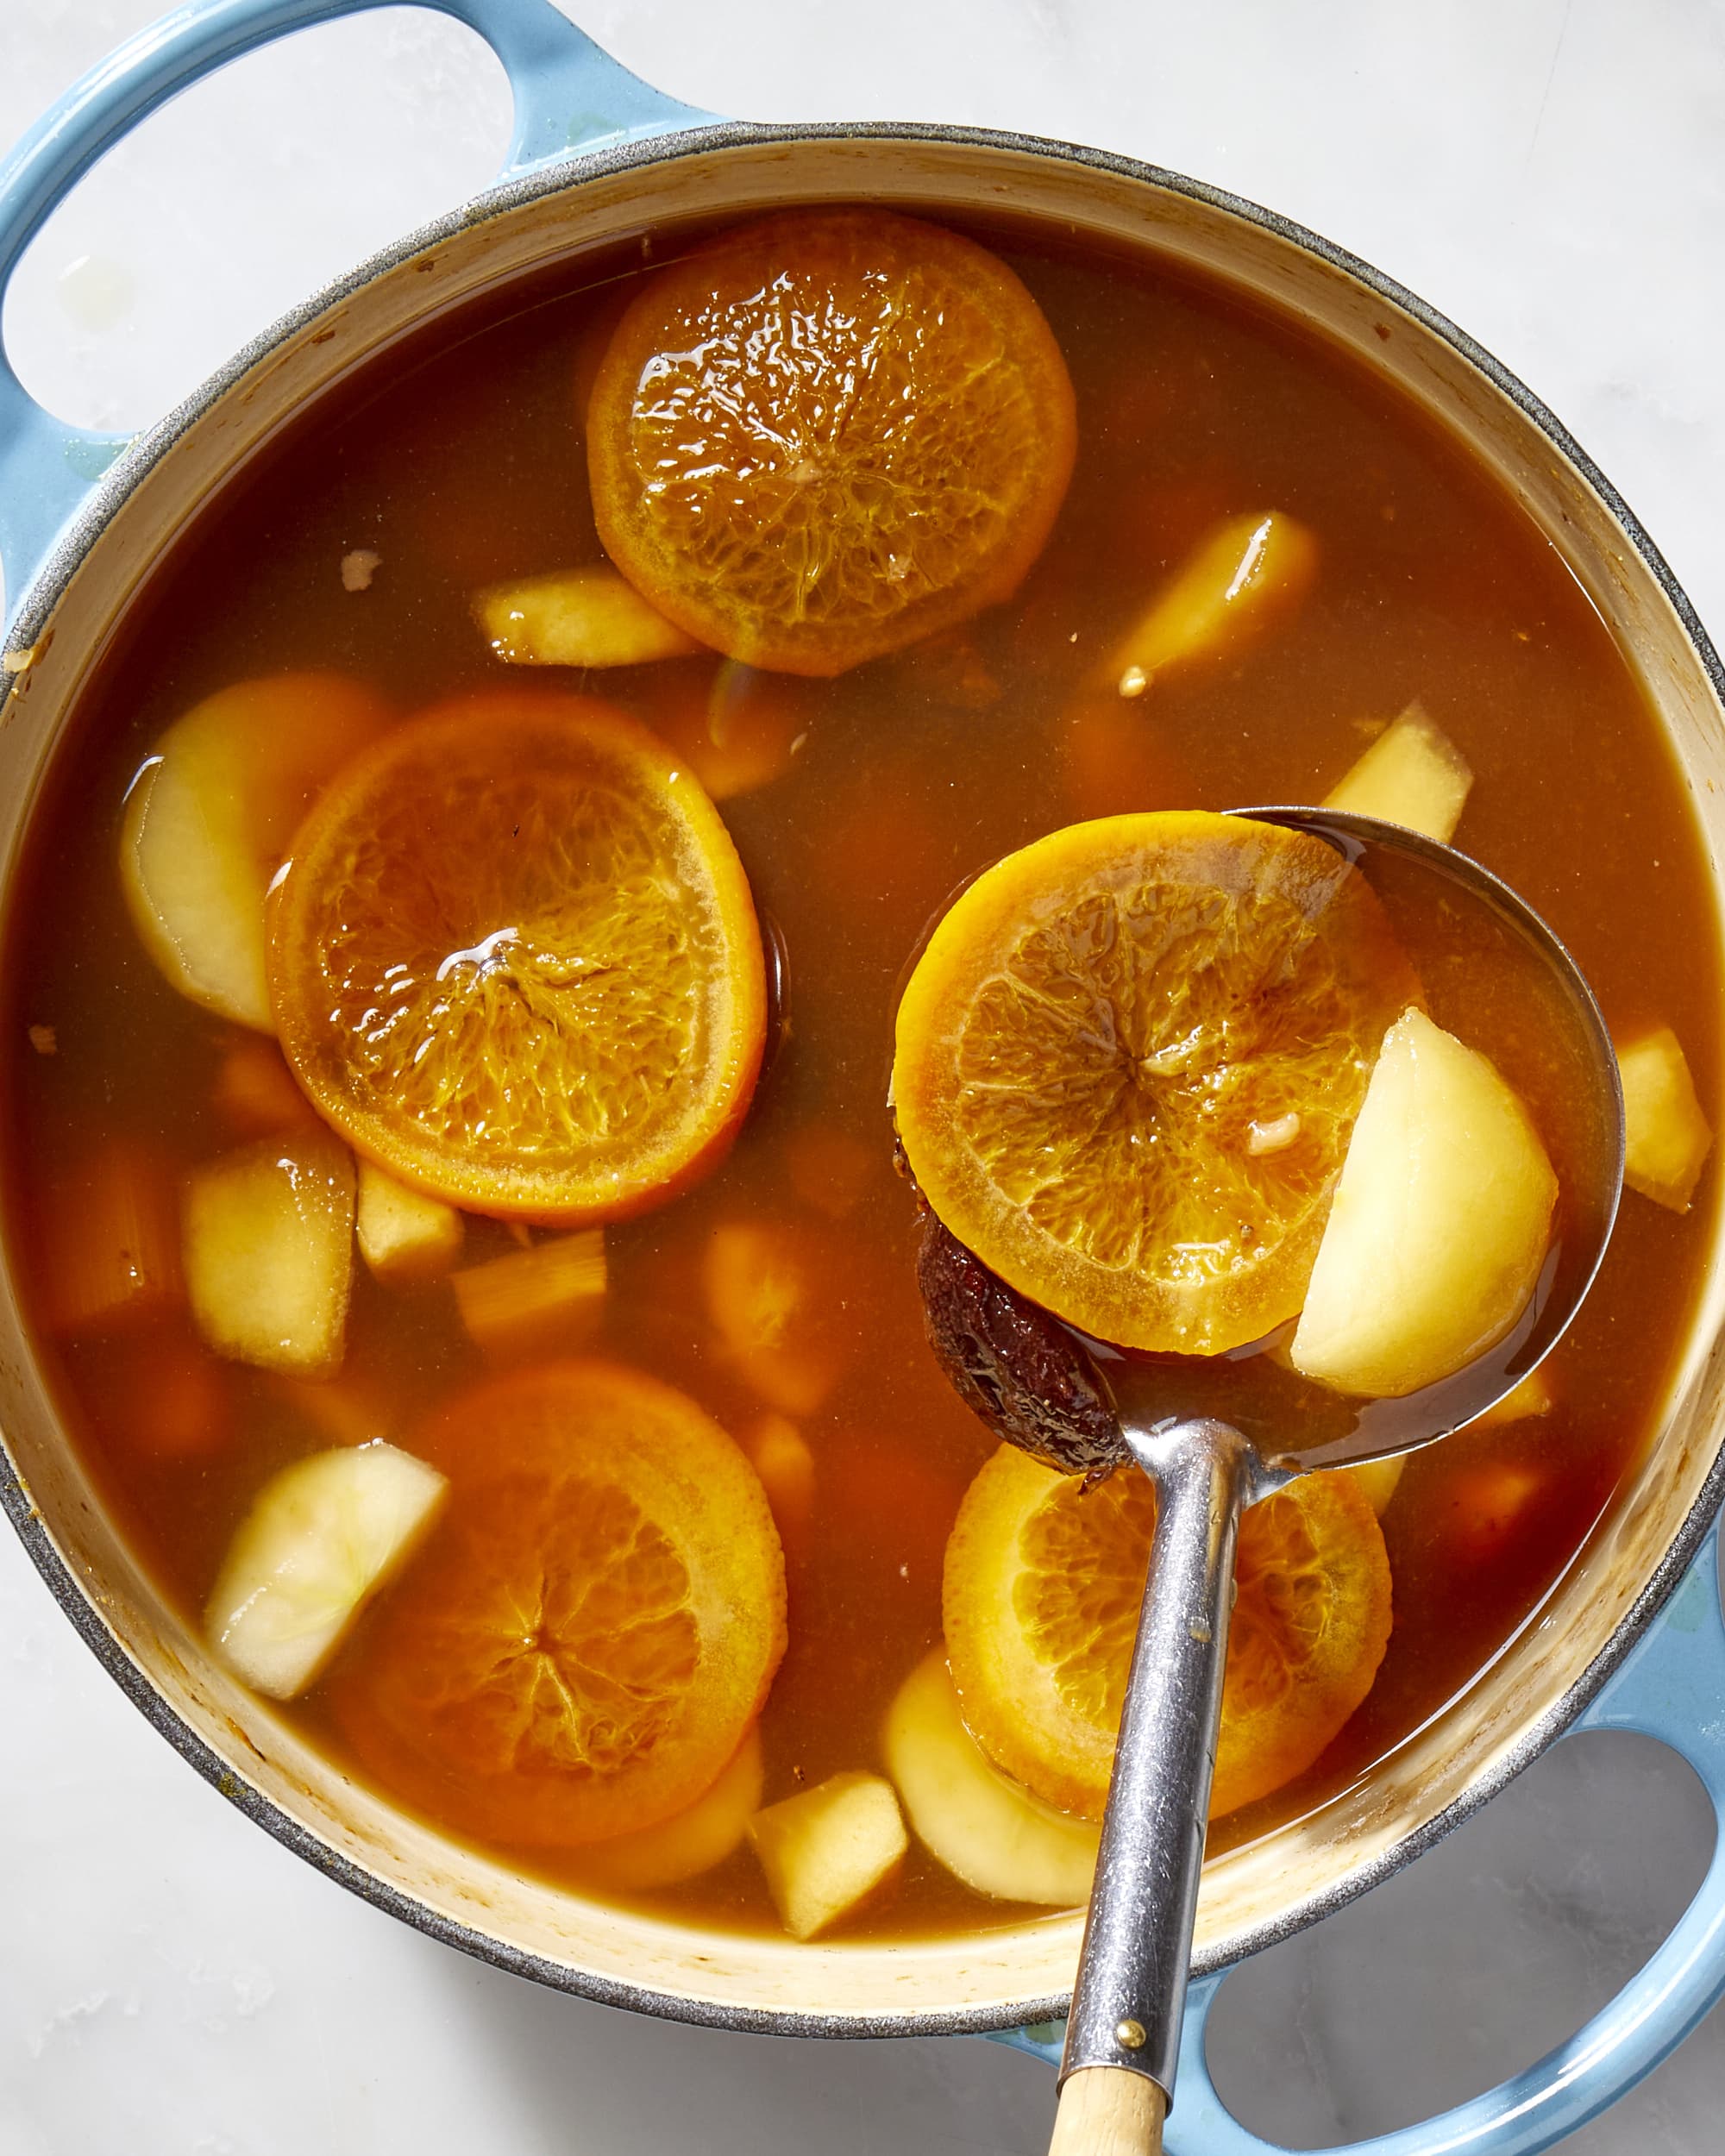 This Crock-Pot lunch warmer is a soup season essential - Pique